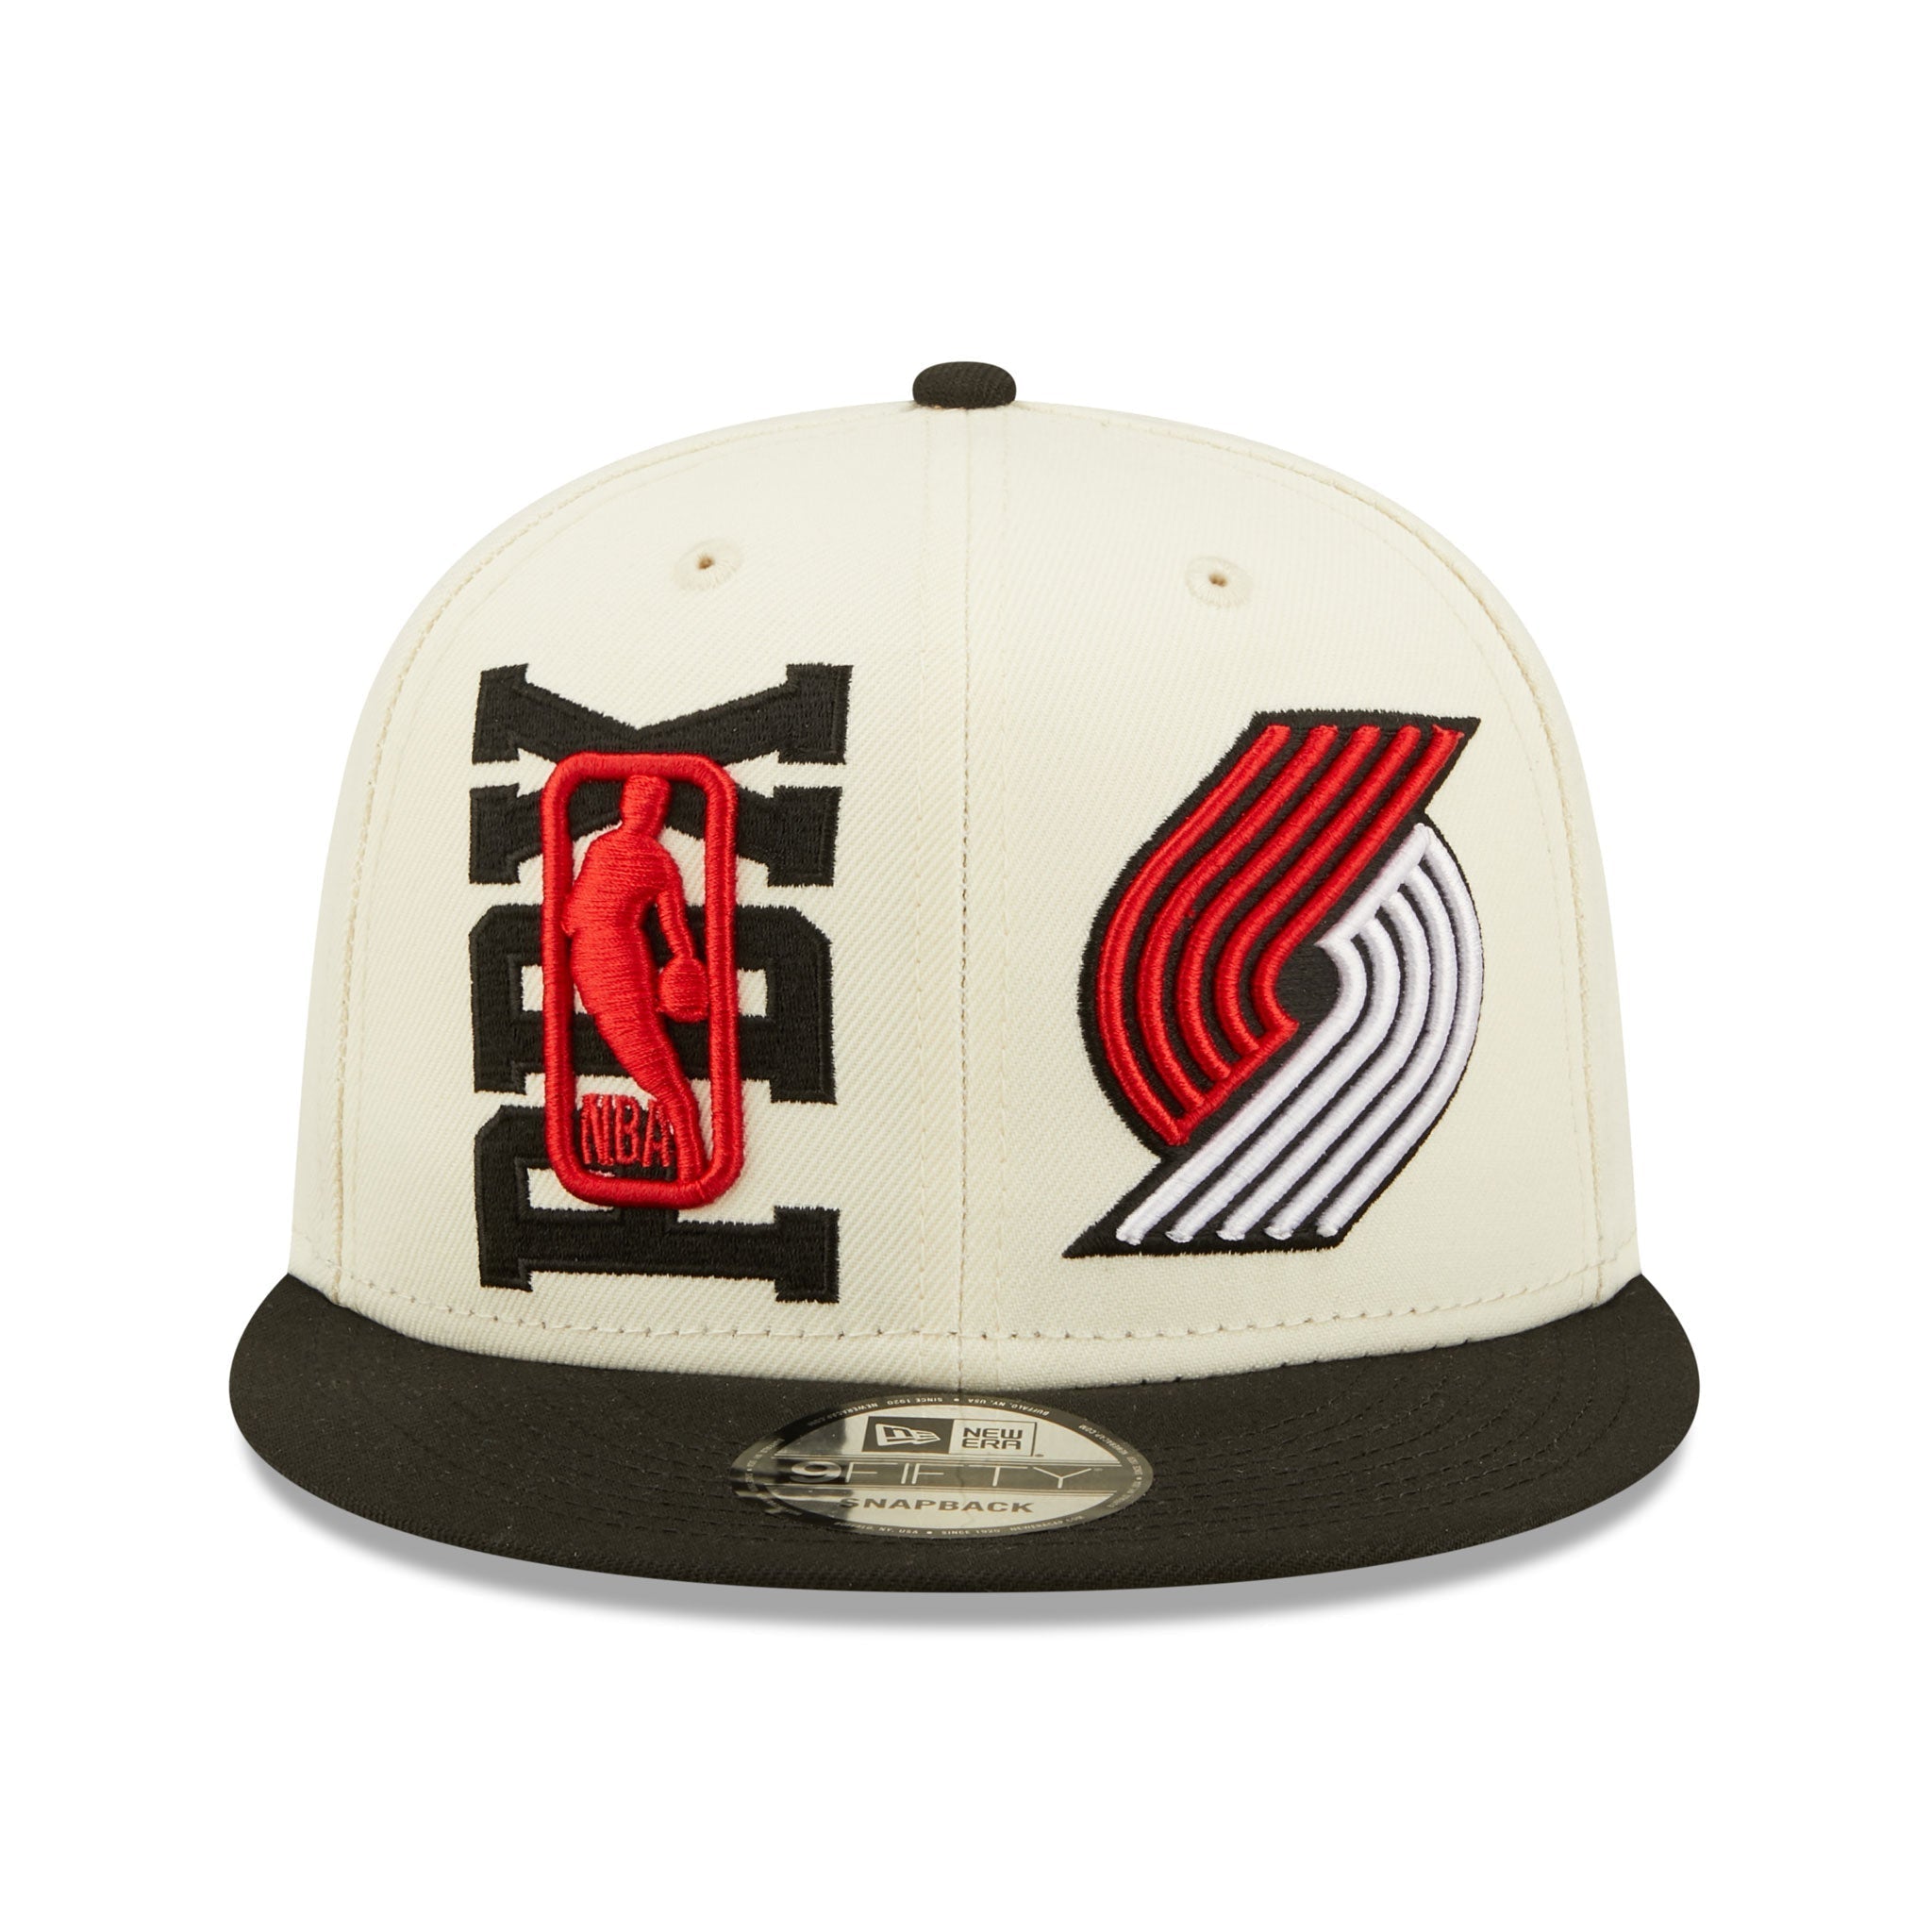 2023 NBA draft hats